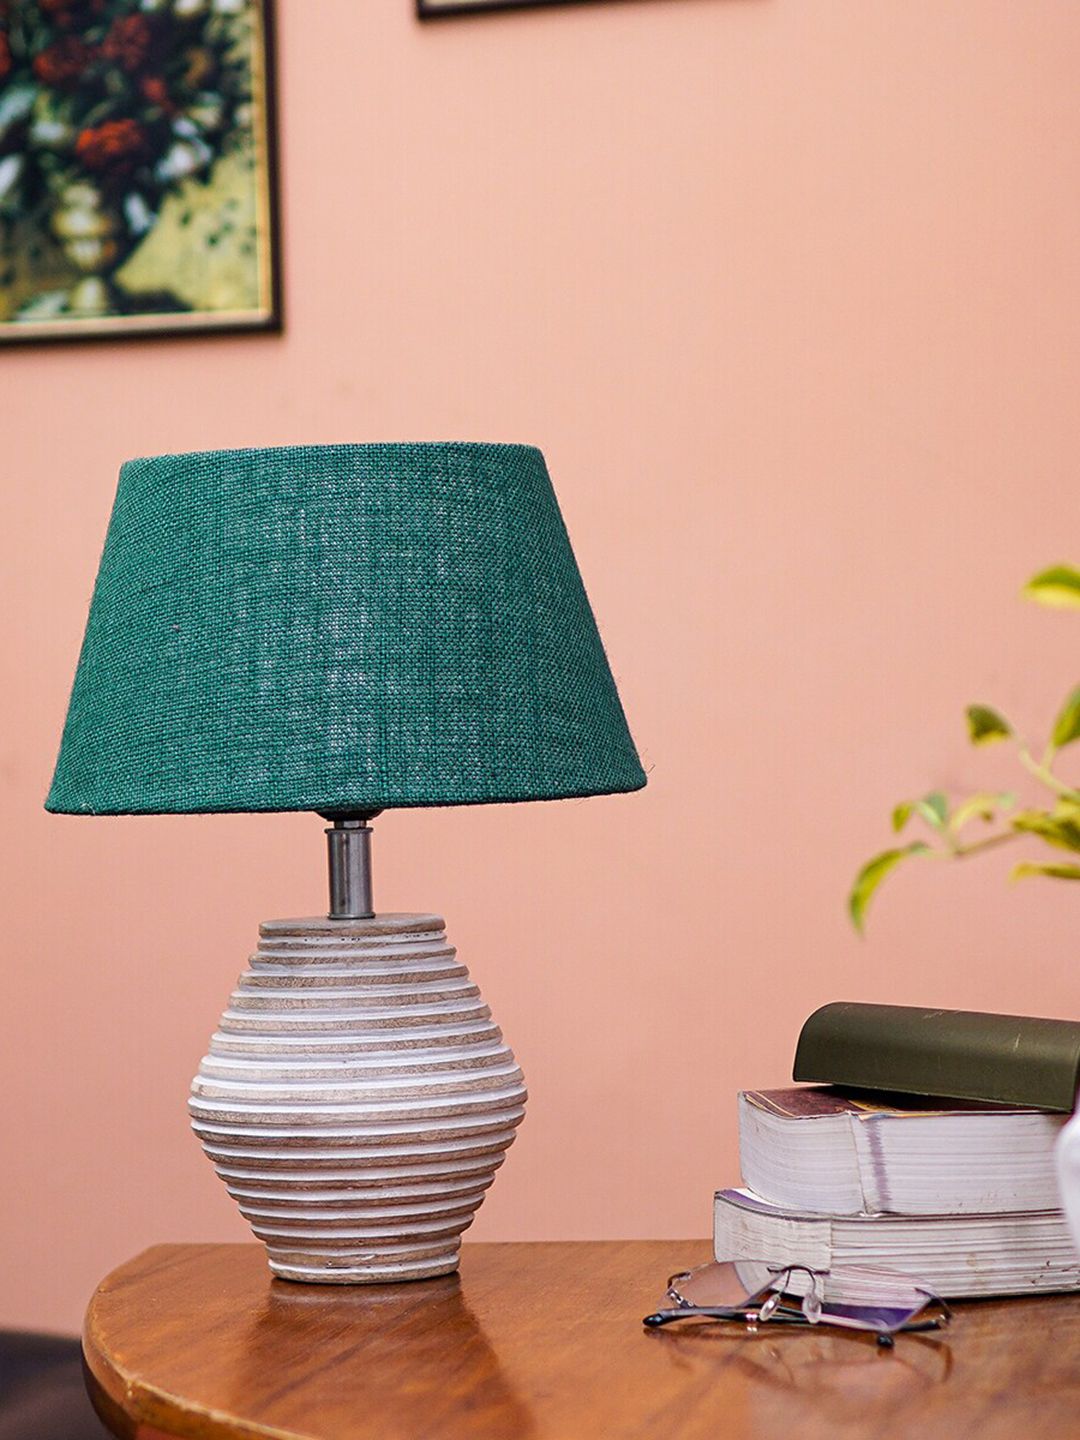 Pinecraft INTERNATIONAL Green Atury Table Lamp With Dark Frustum Shade Price in India